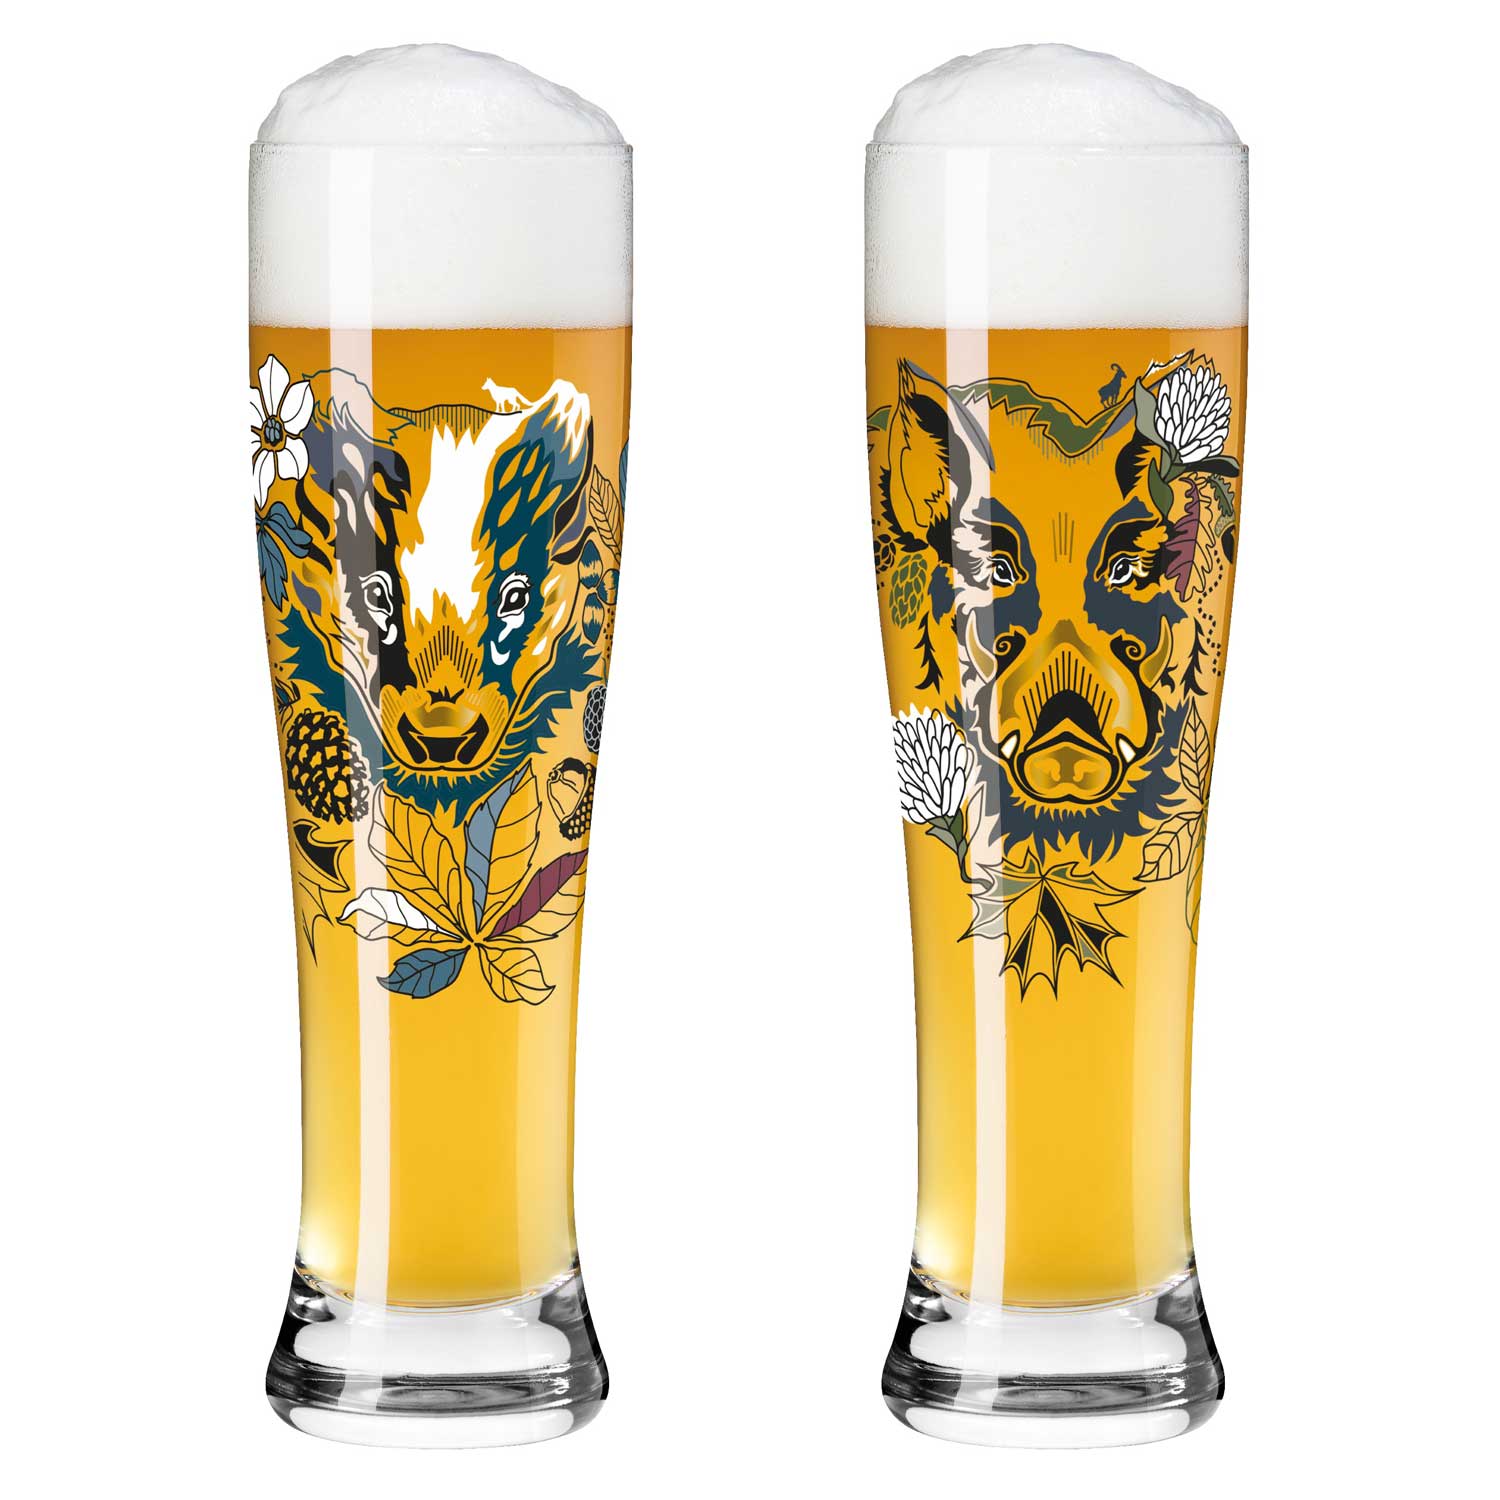 Ritzenhoff Brauchzeit Öl 2-pack #7 & 8 - Ölglas Glas Klar